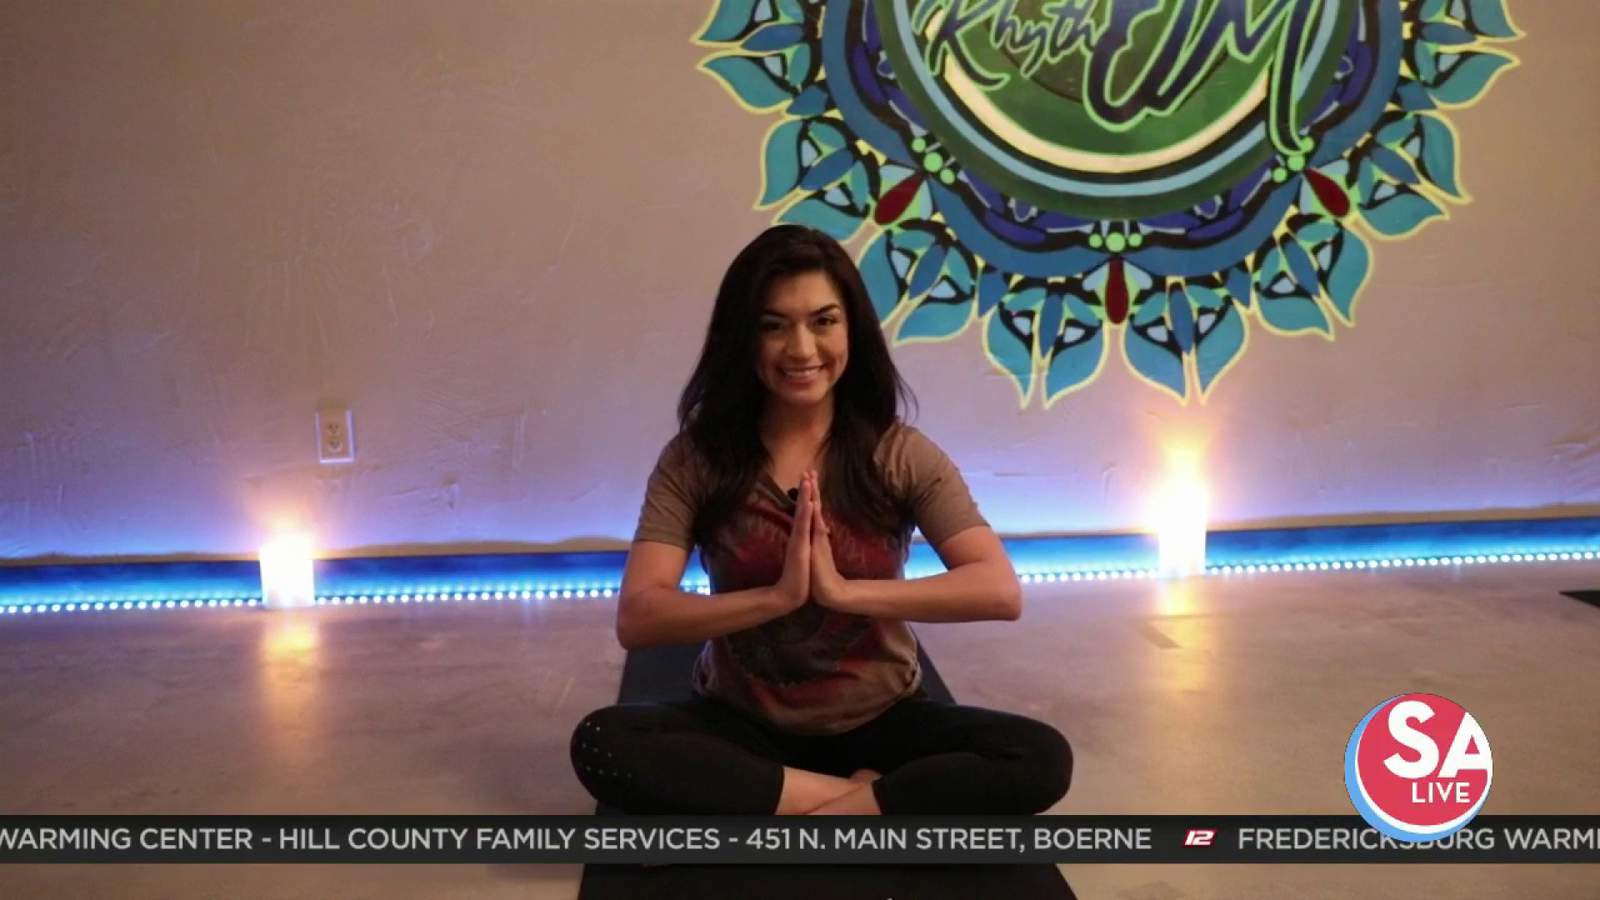 Yoga studio combines heat, candlelight to melt the stress away